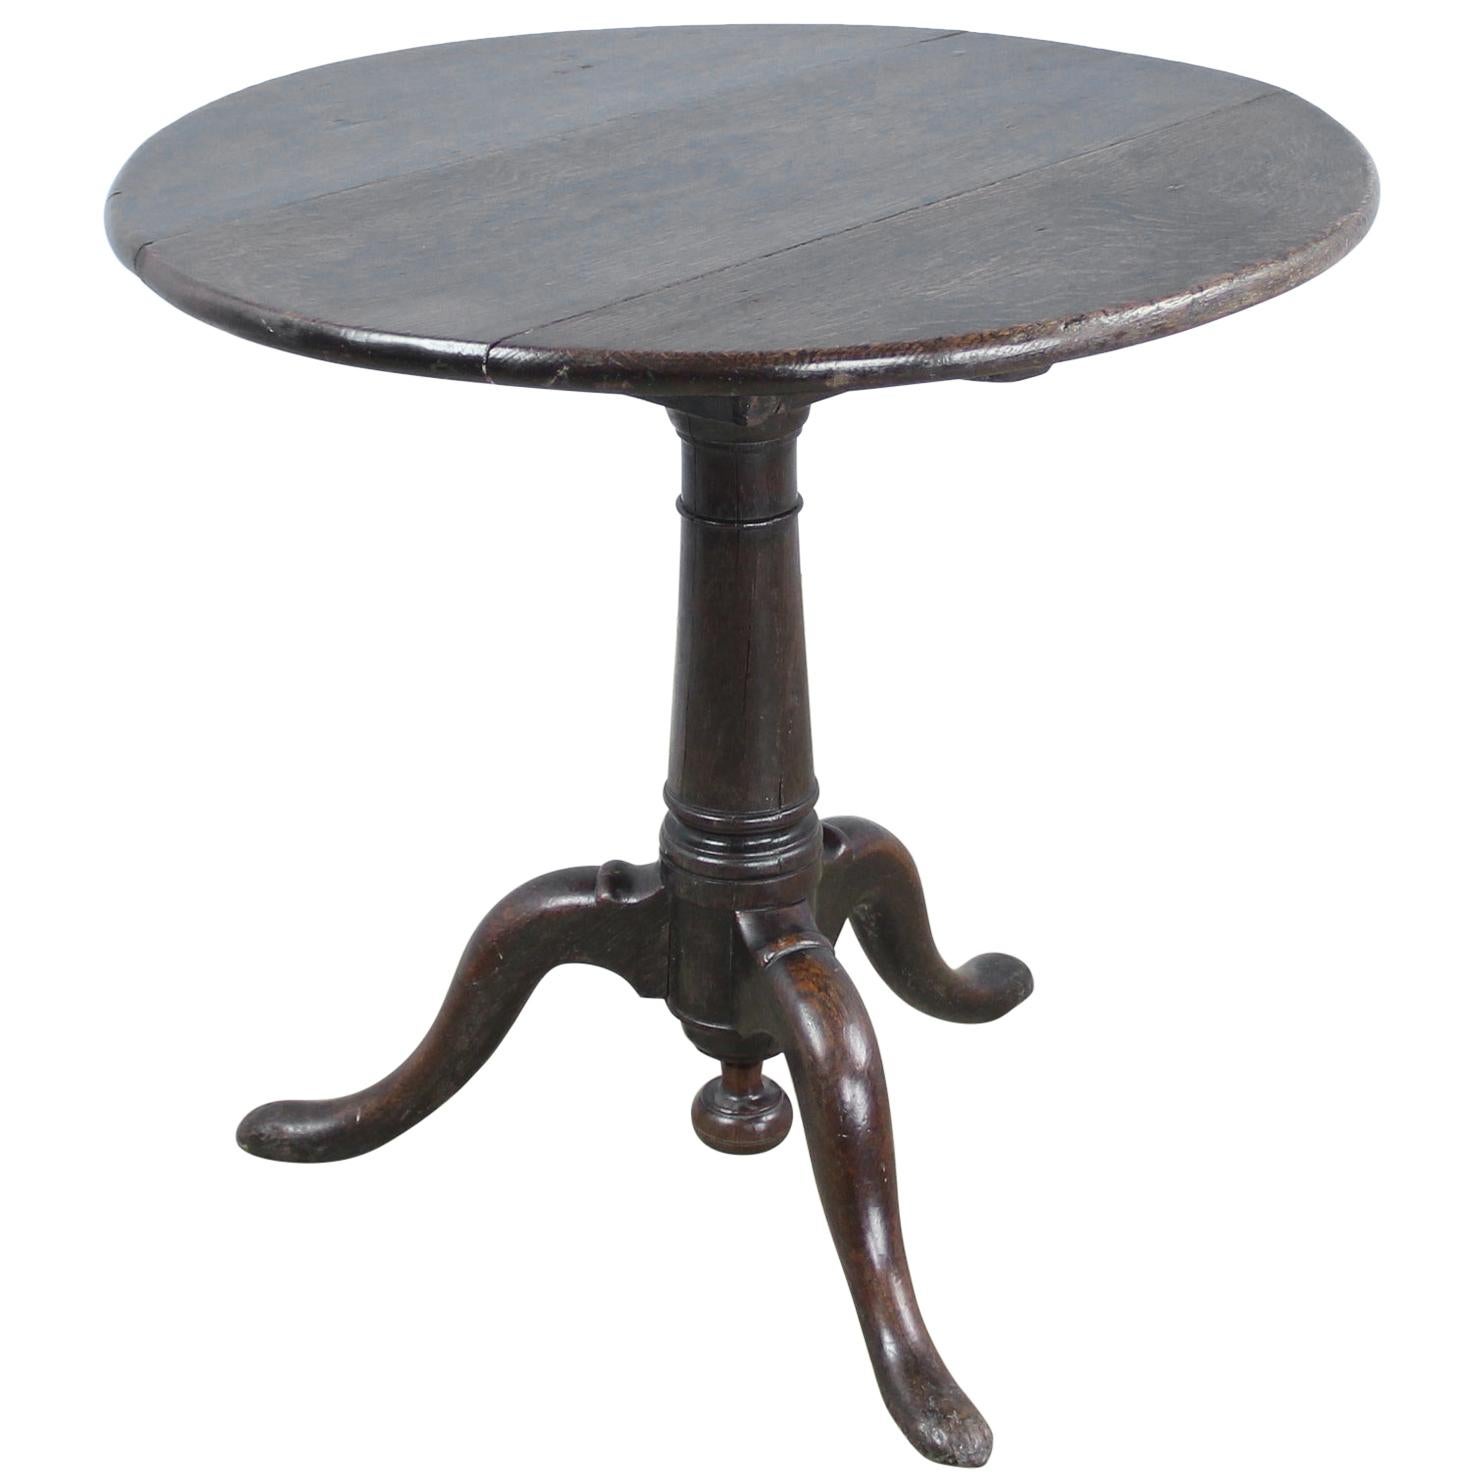 Early Georgian Period Oak Tripod Based Lamp Table For Sale